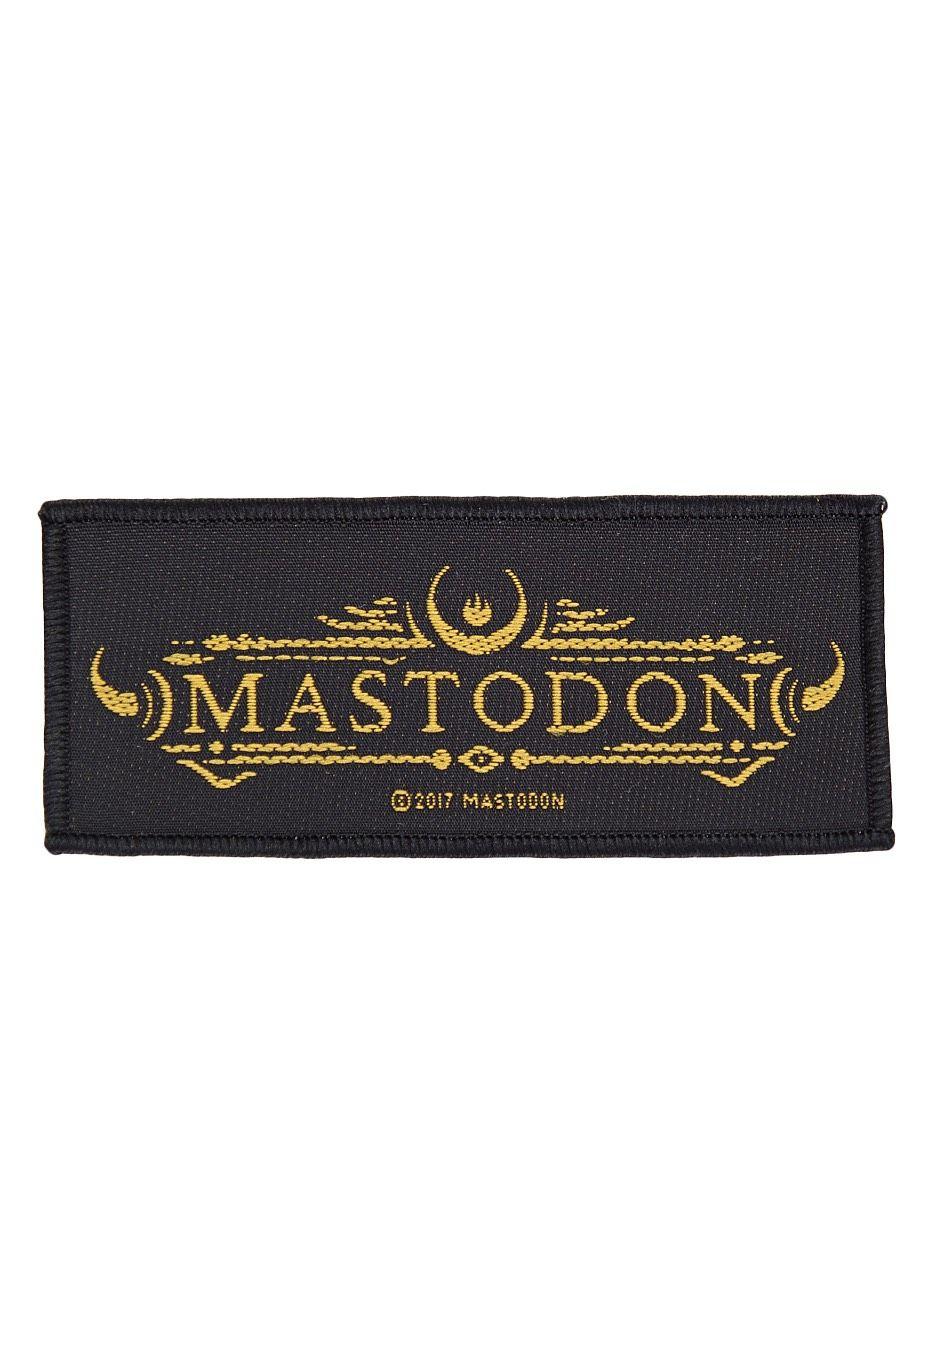 Mastodon Logo - Mastodon - Logo - Patch